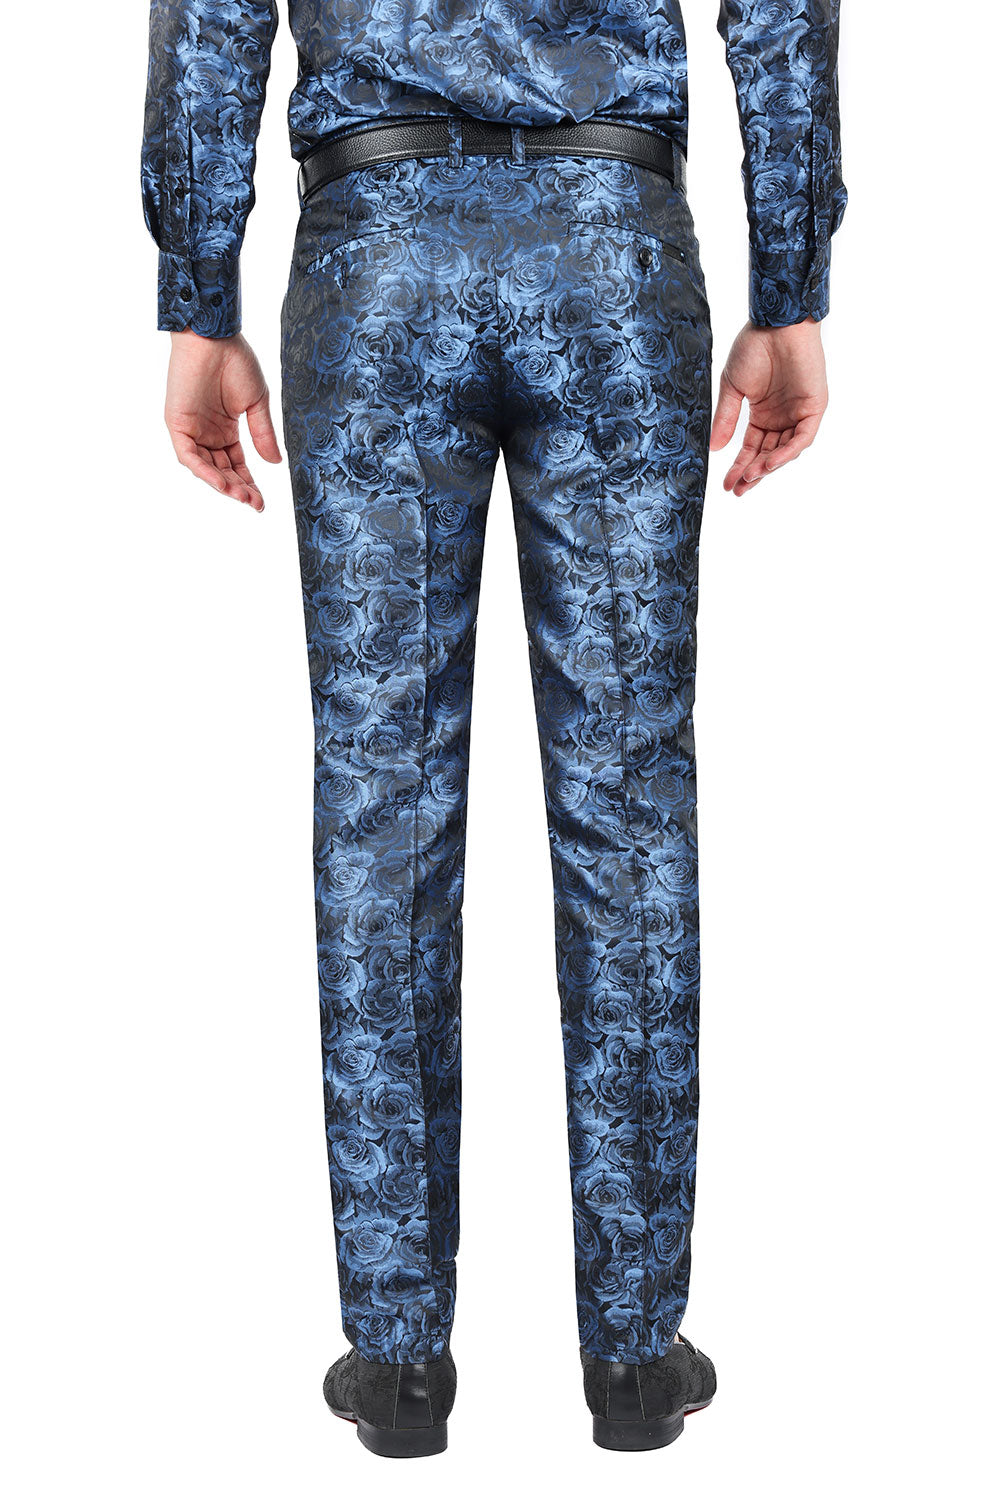 Barabas Men's Floral Rose Shiny Metallic Dress Pants 2CP03 Blue